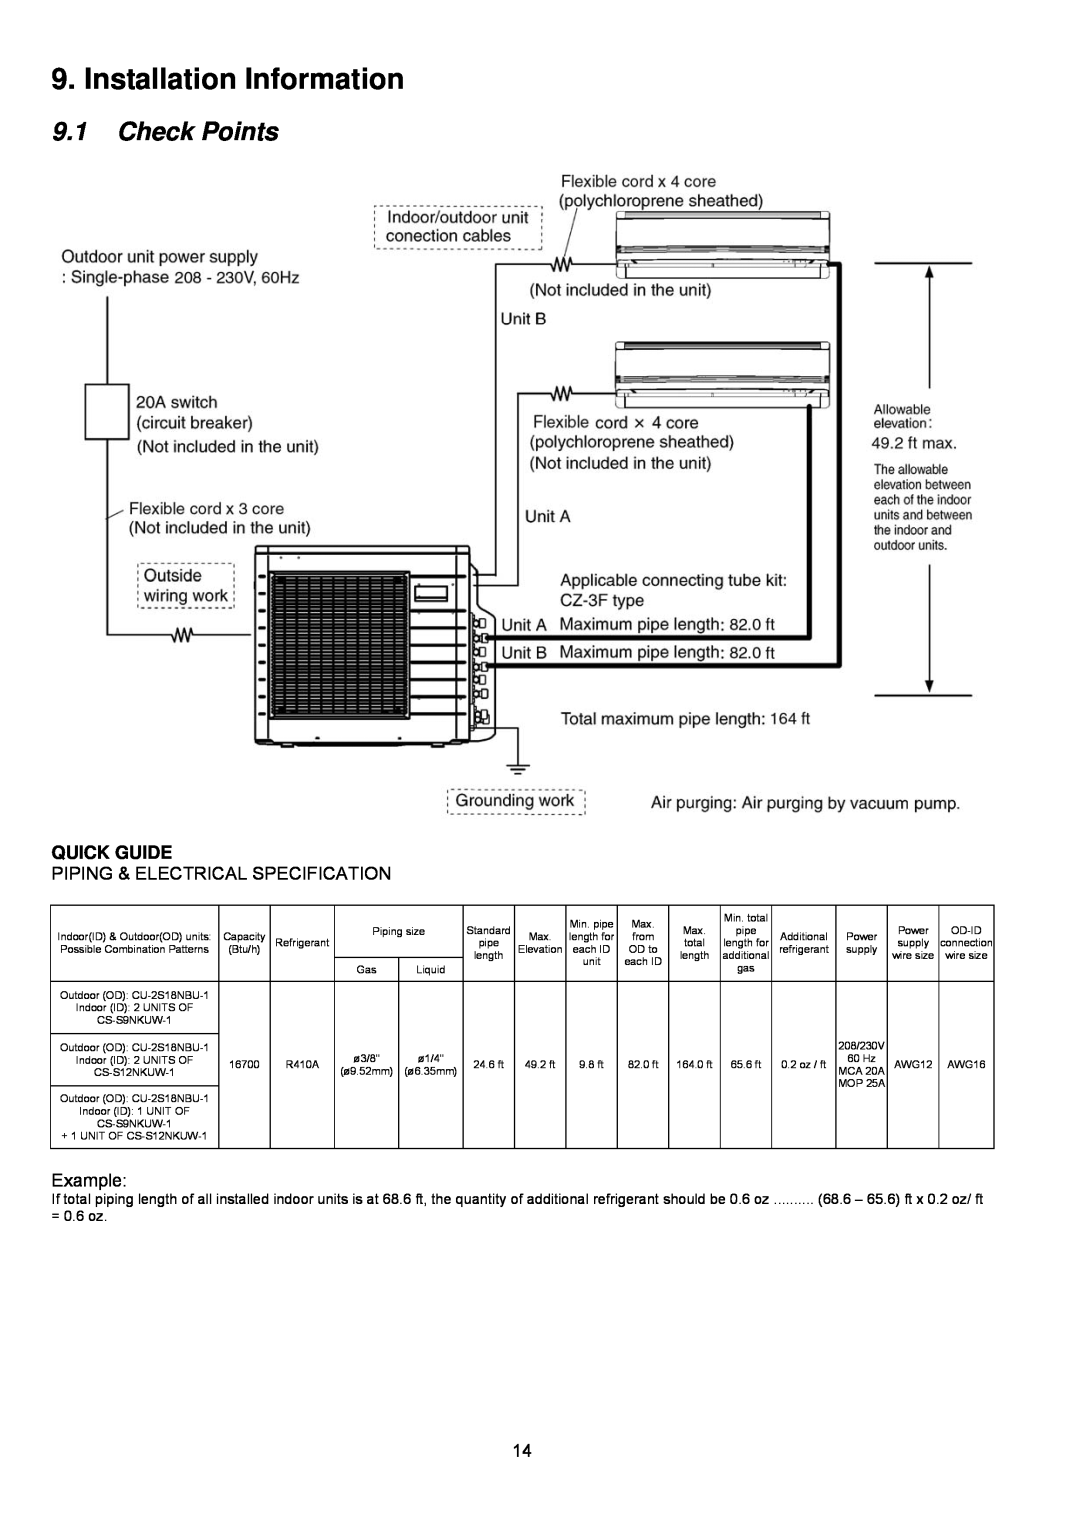 Panasonic CU-2S18NBU-1 service manual Installation Information, 9.1Check Points, Quick Guide 